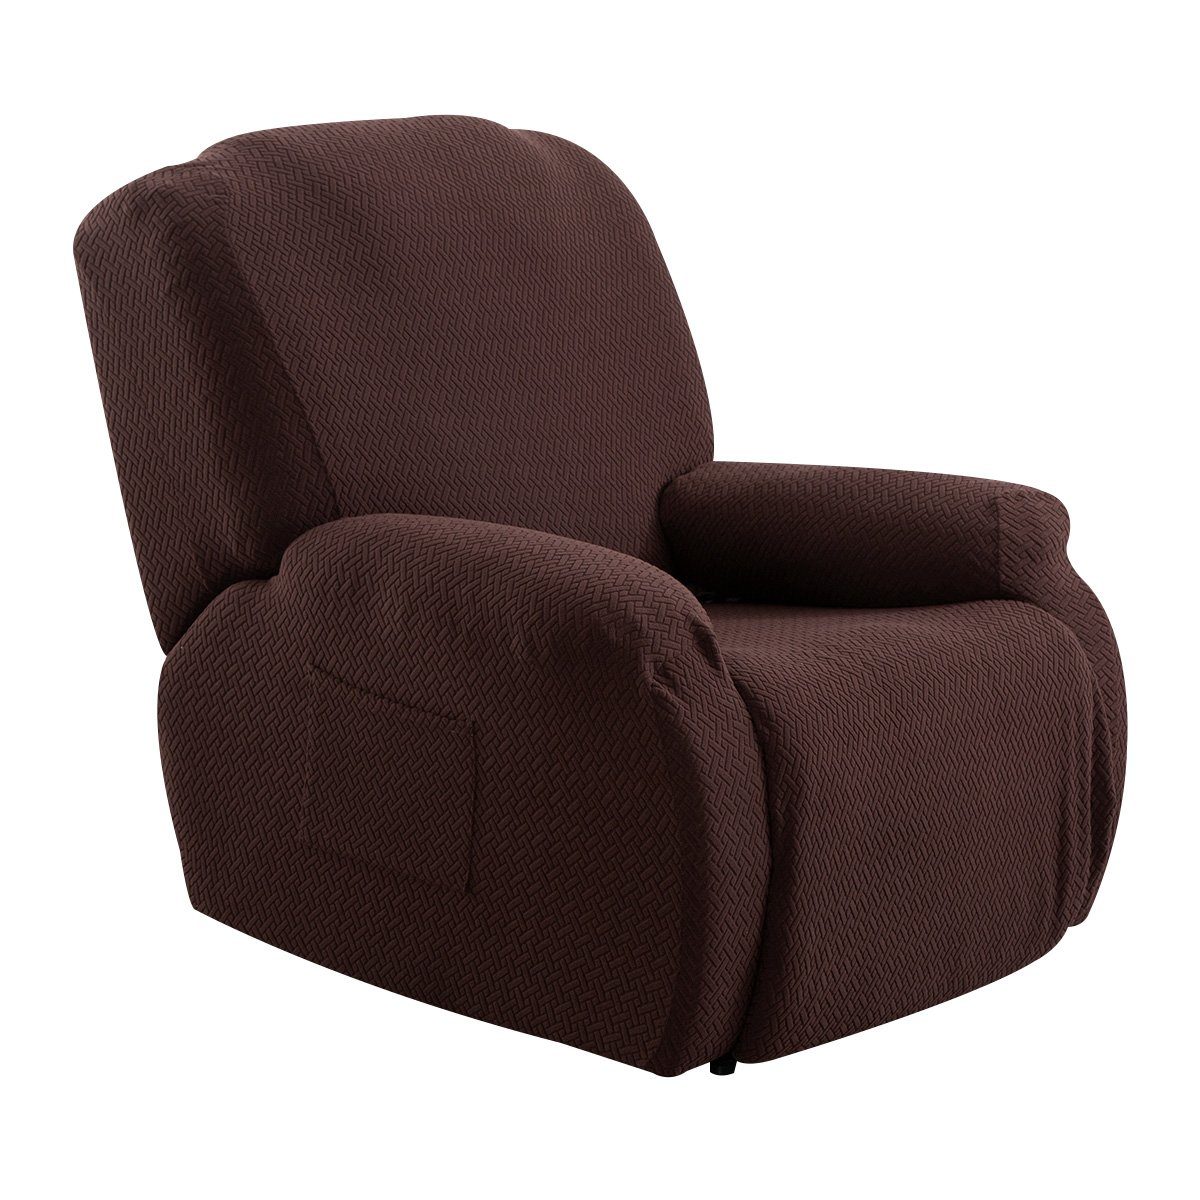 Sesselhusse Sesselbezug Stretchhusse, Relaxsessel Komplett für Liege Sessel, Rosnek, mit Strukturoptik Braun | Sesselhussen